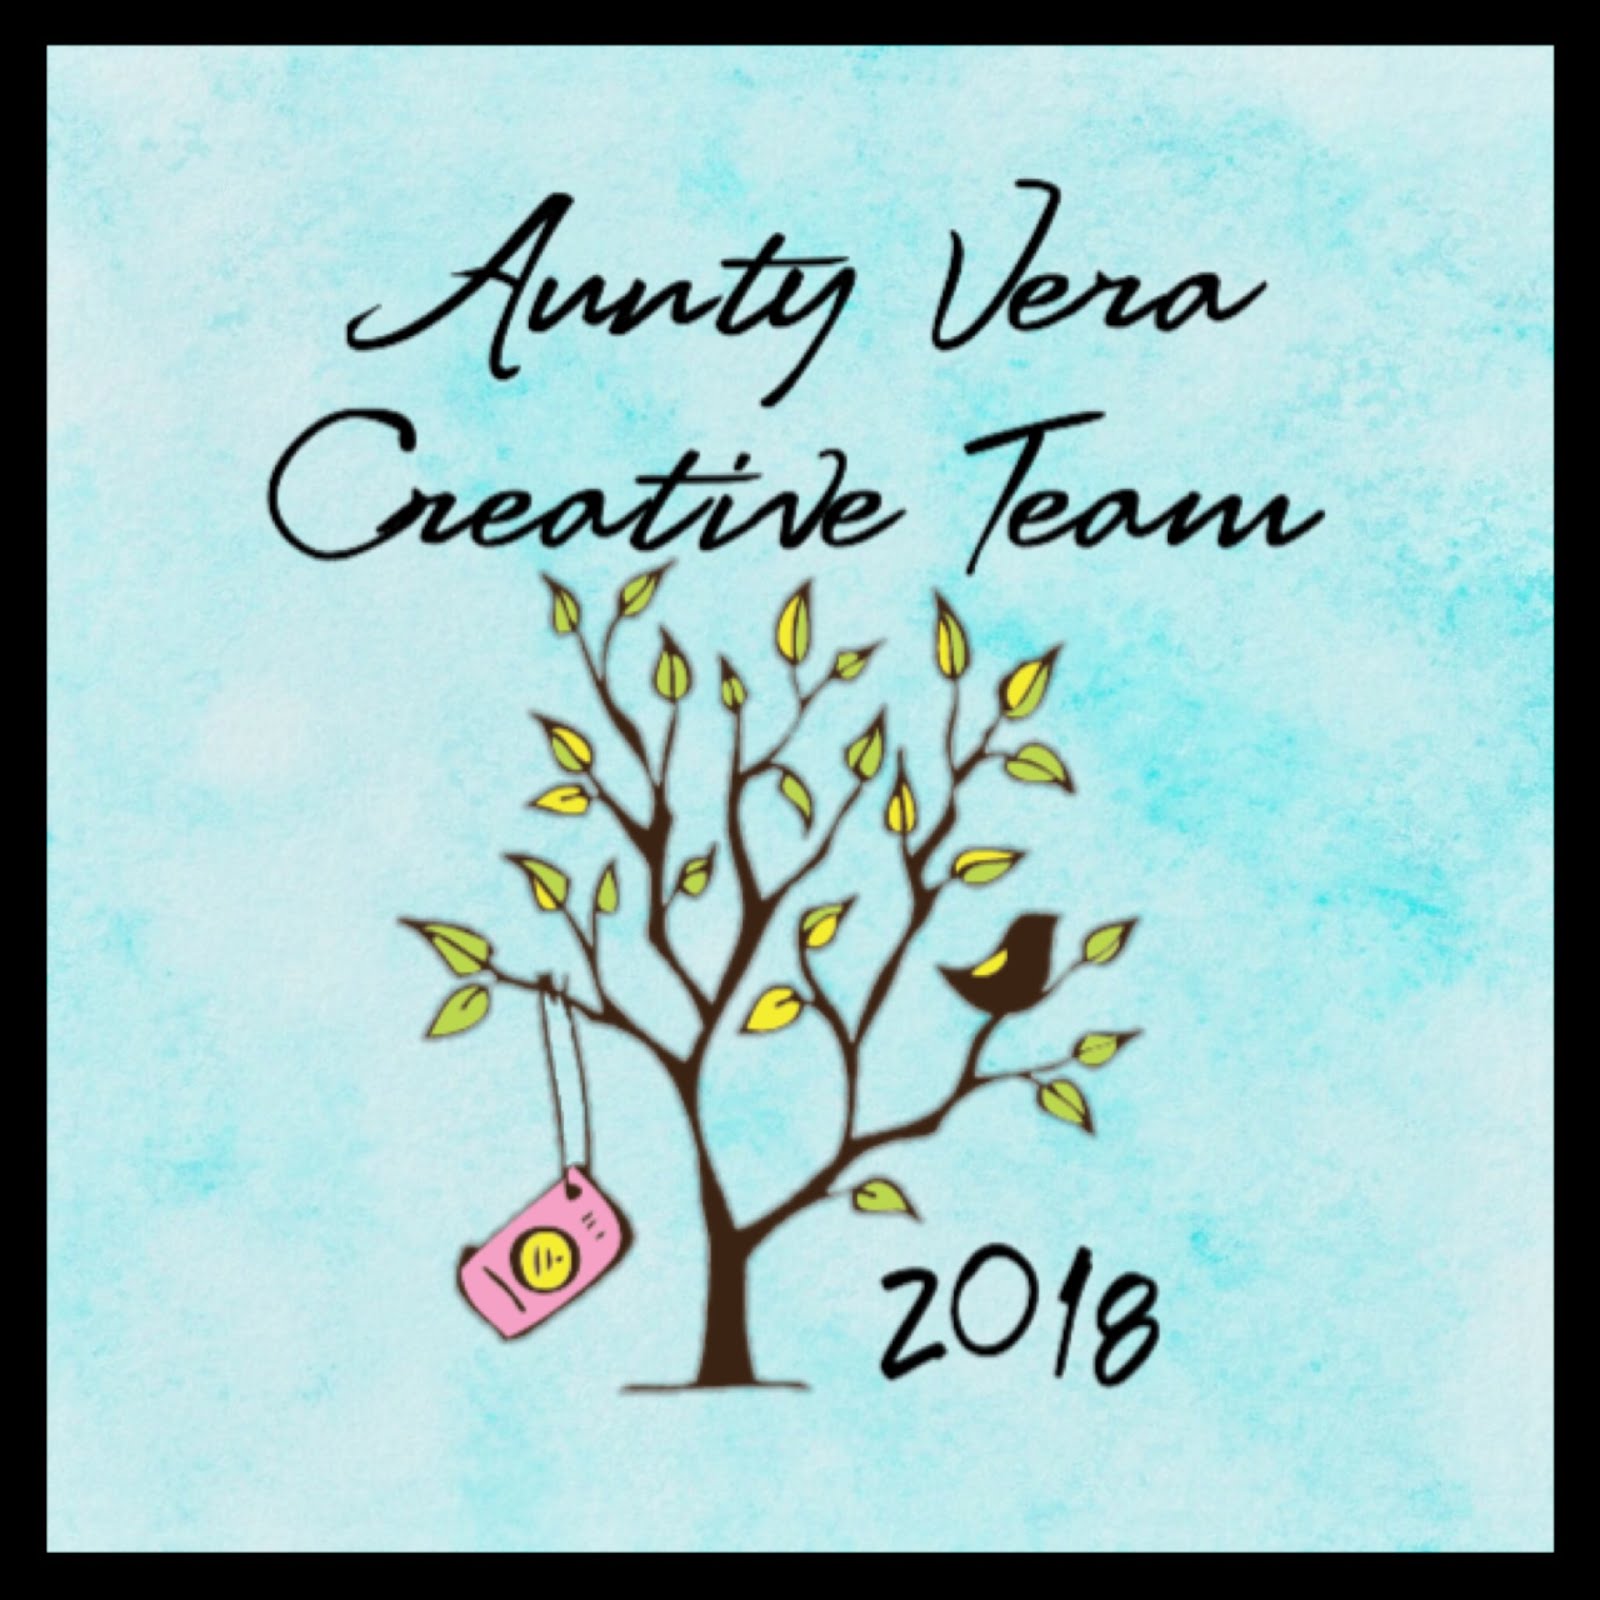 I am on the Creative Team for 2018